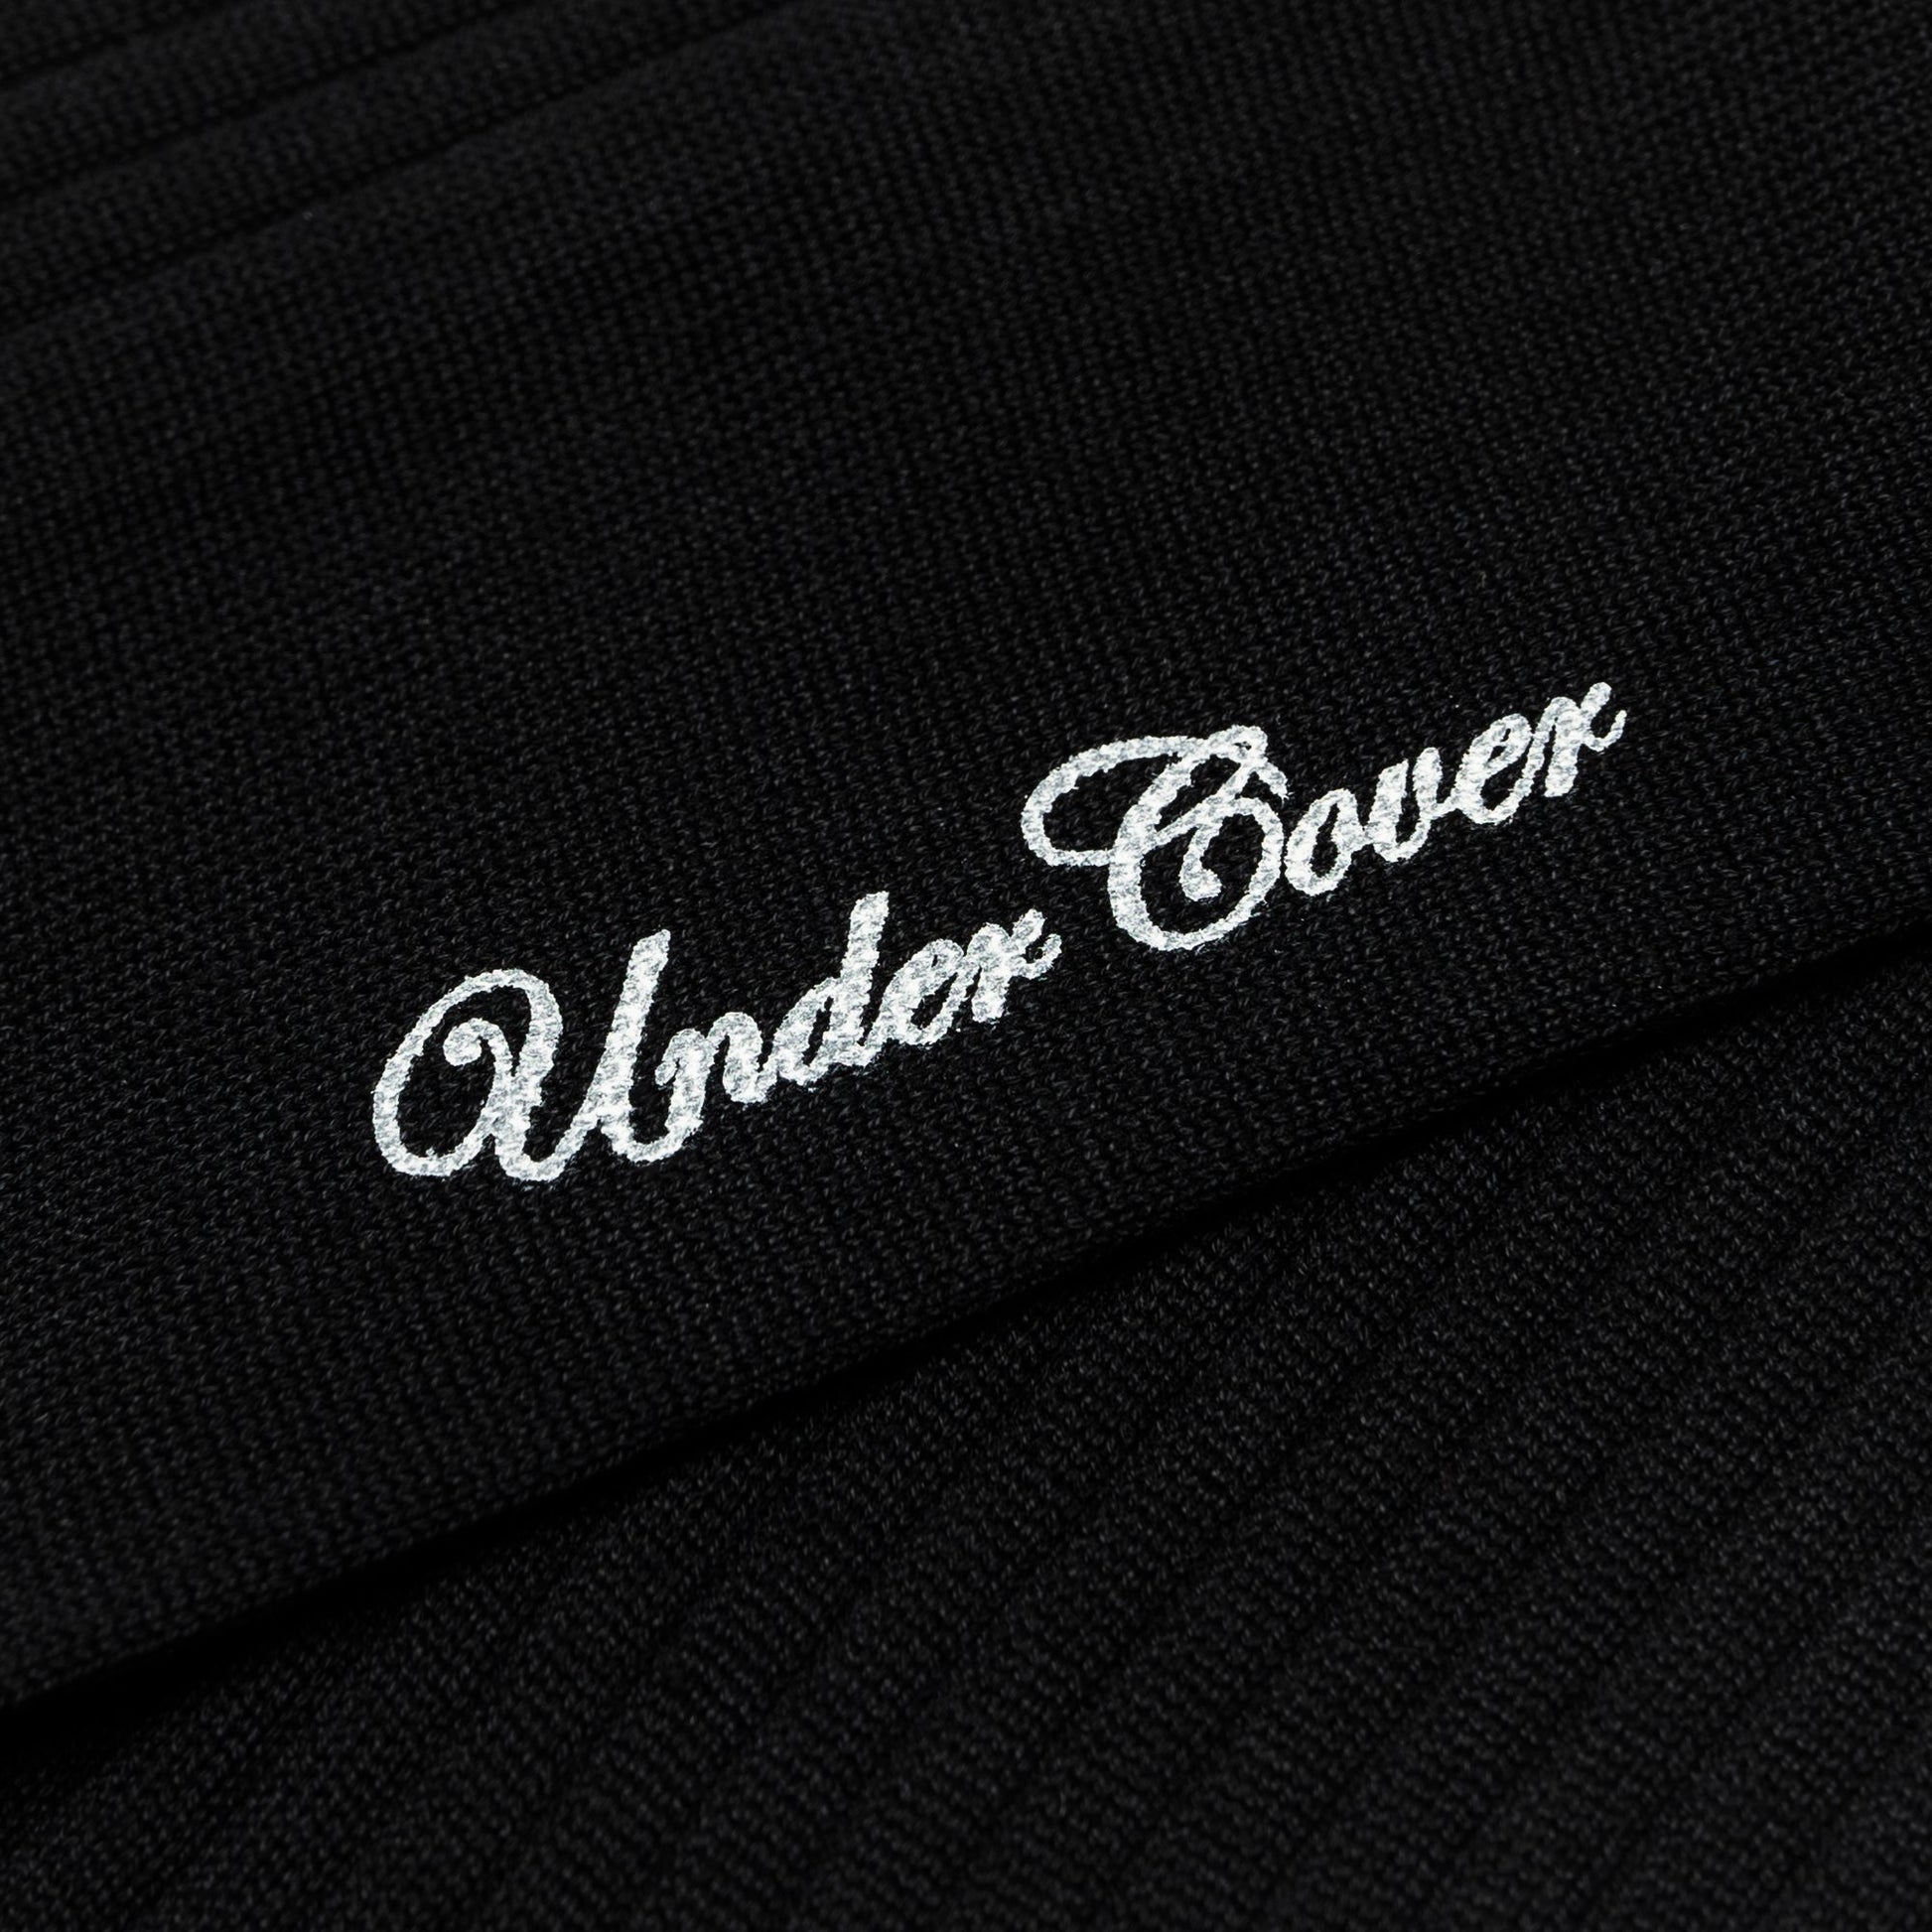 undercover socks (black) - ucy4l01-black - a.plus - Image - 2